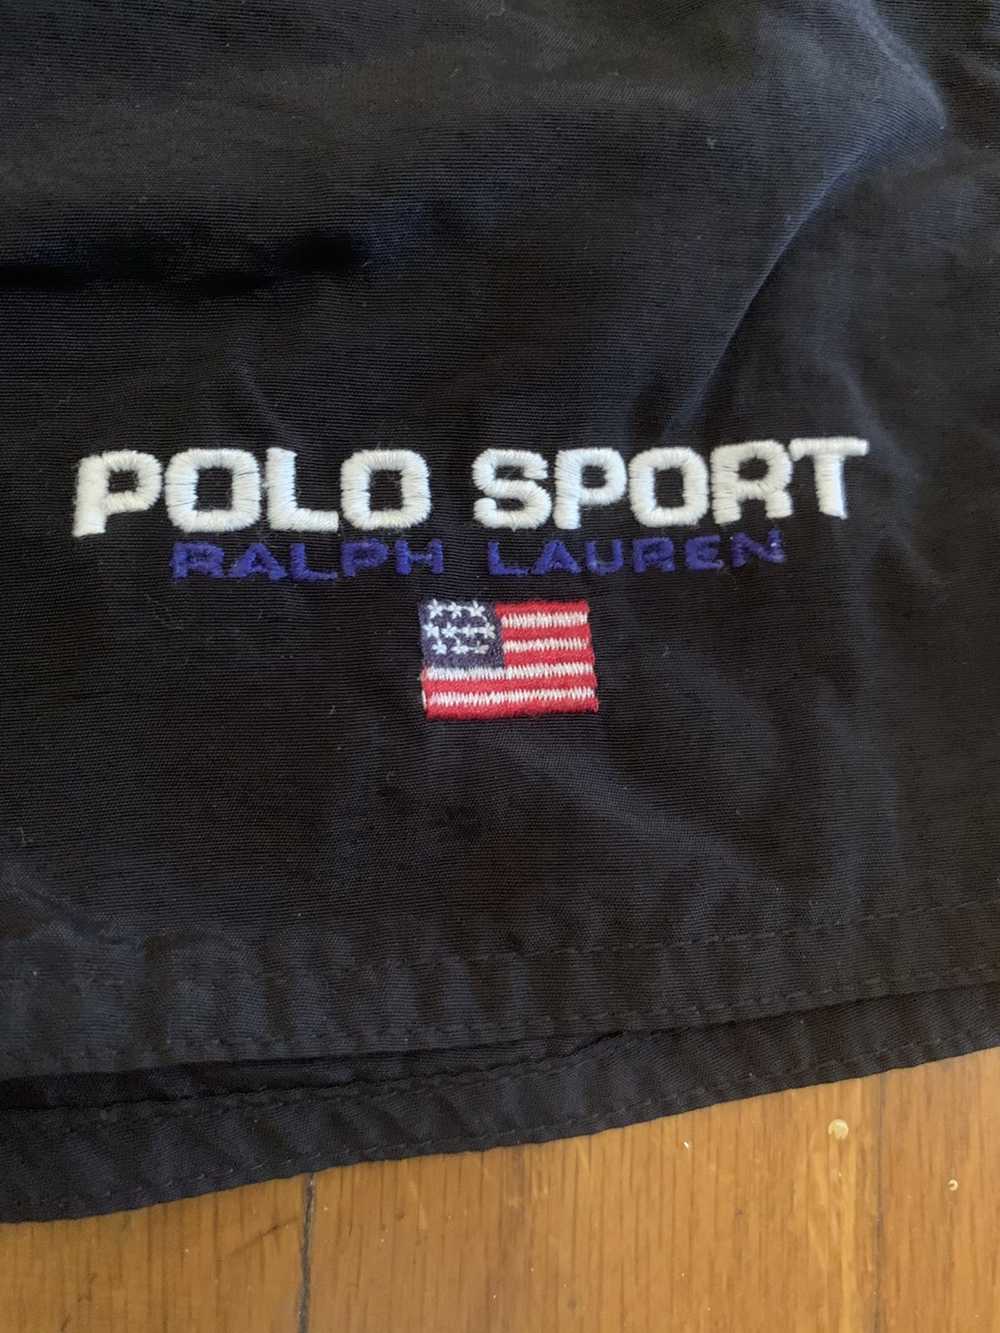 Polo Ralph Lauren Polo sport shorts - image 2